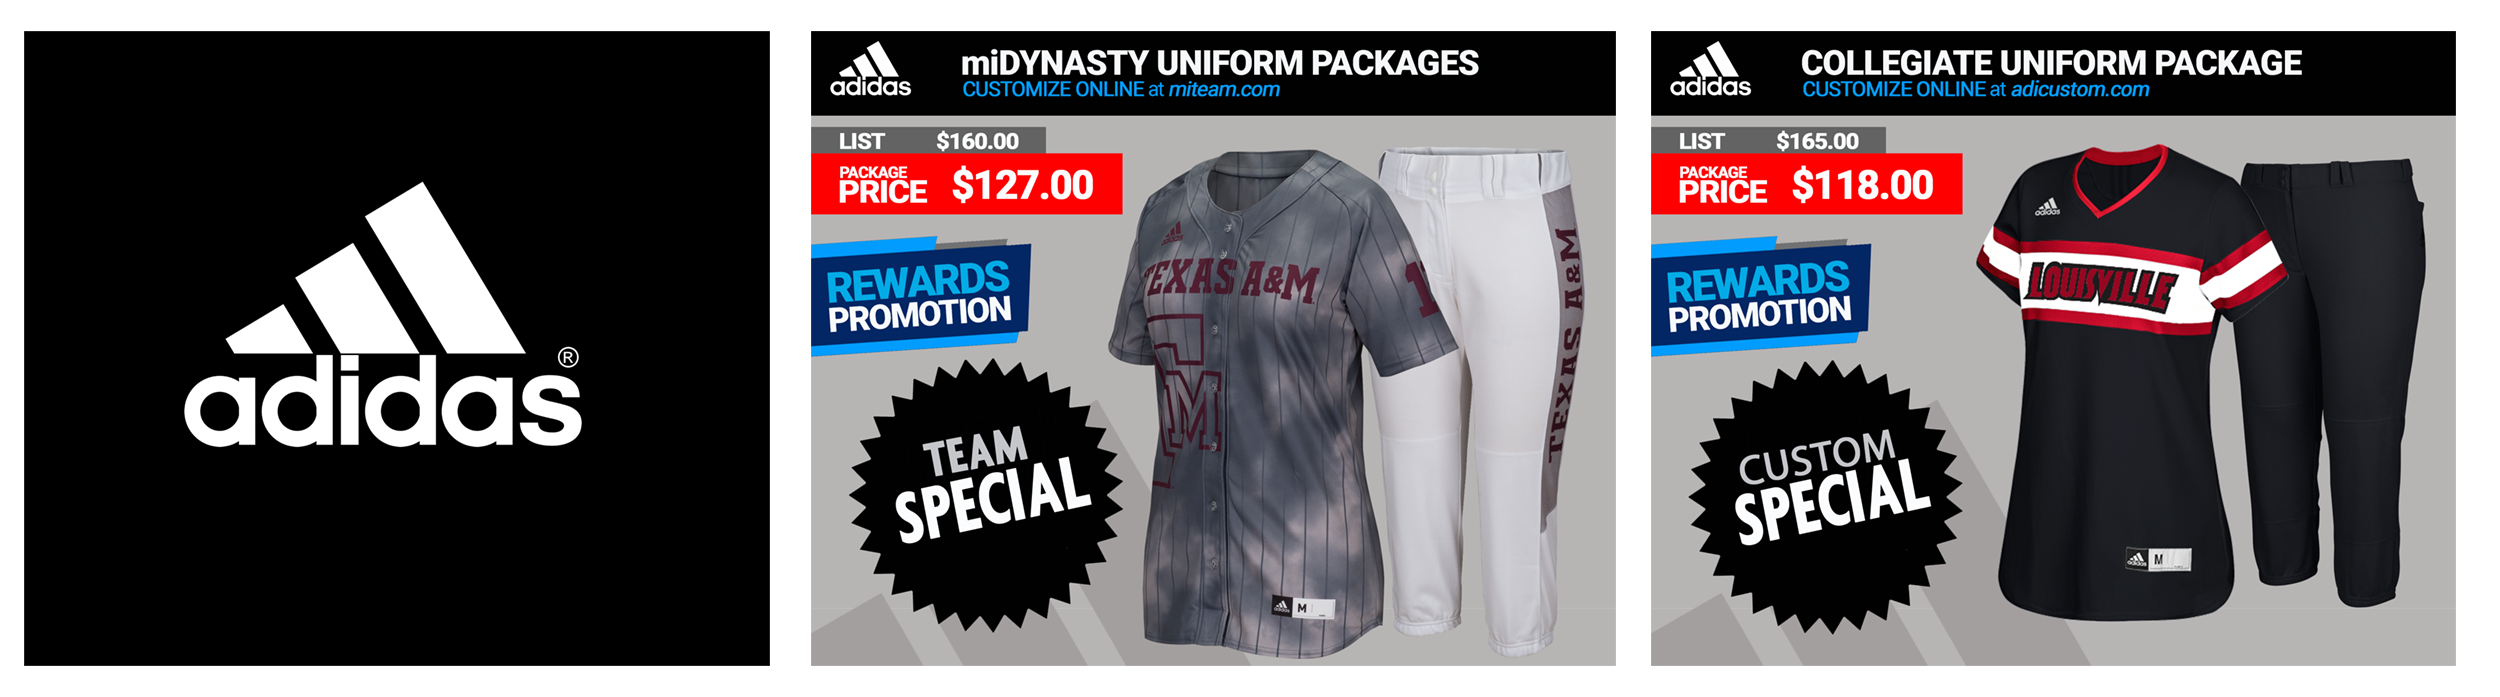 Adidas Softball Uniform Packages